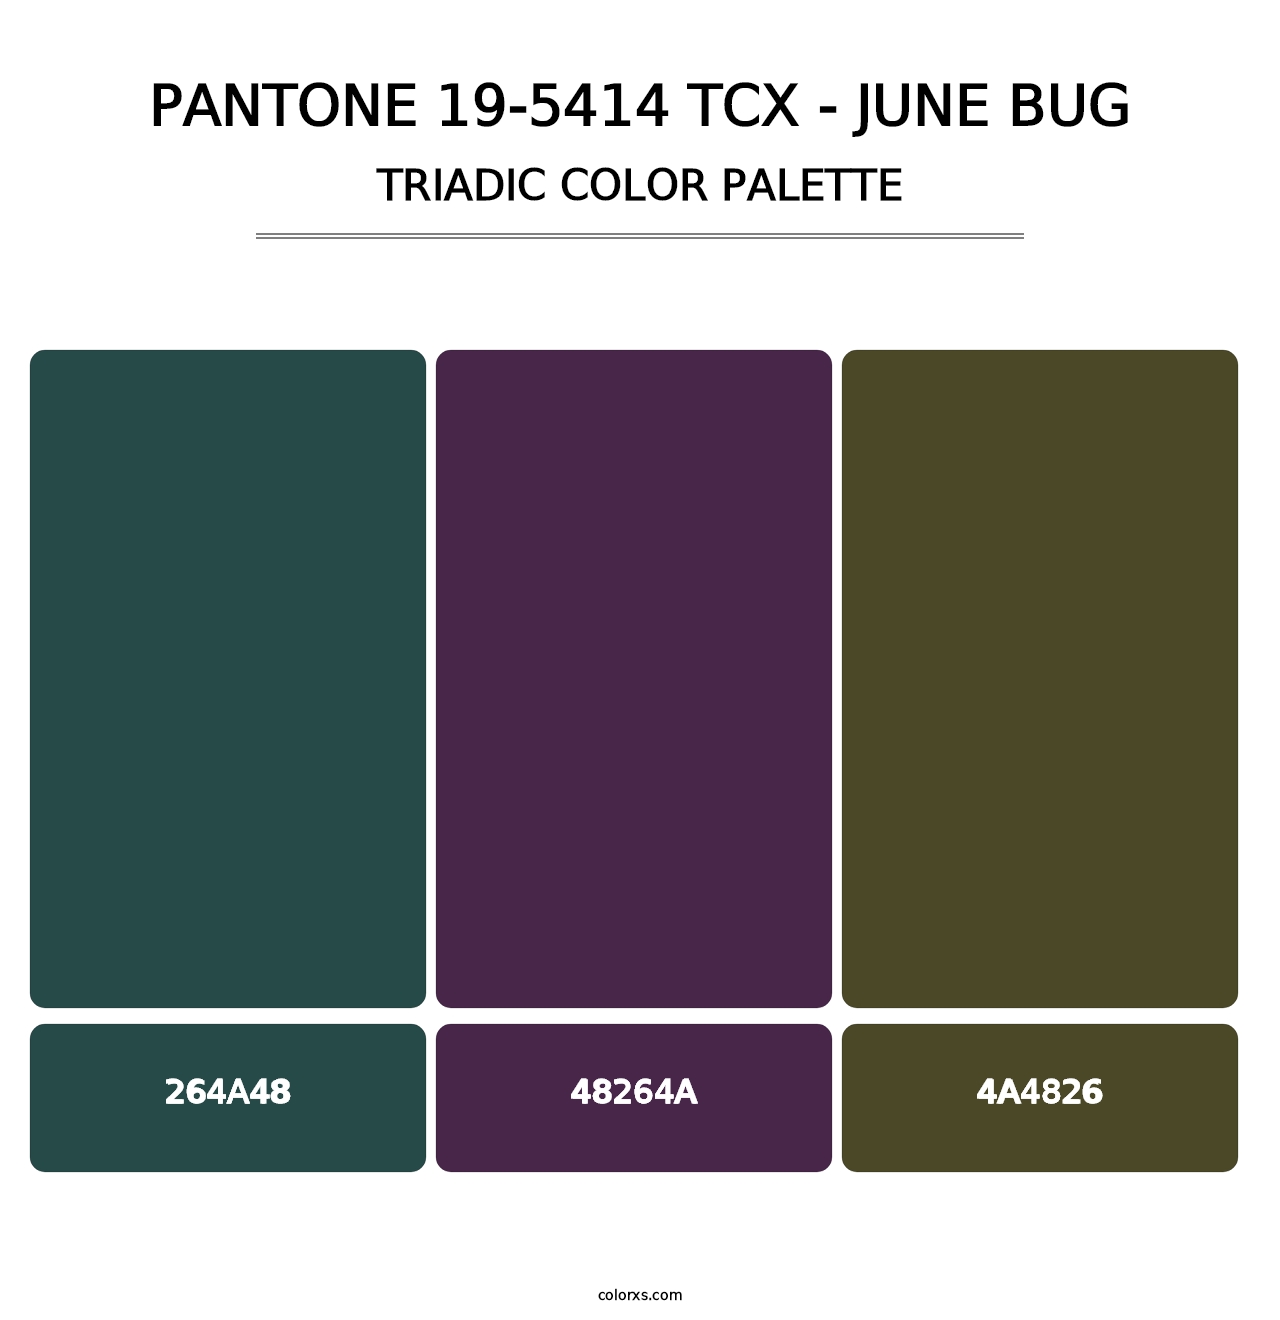 PANTONE 19-5414 TCX - June Bug - Triadic Color Palette